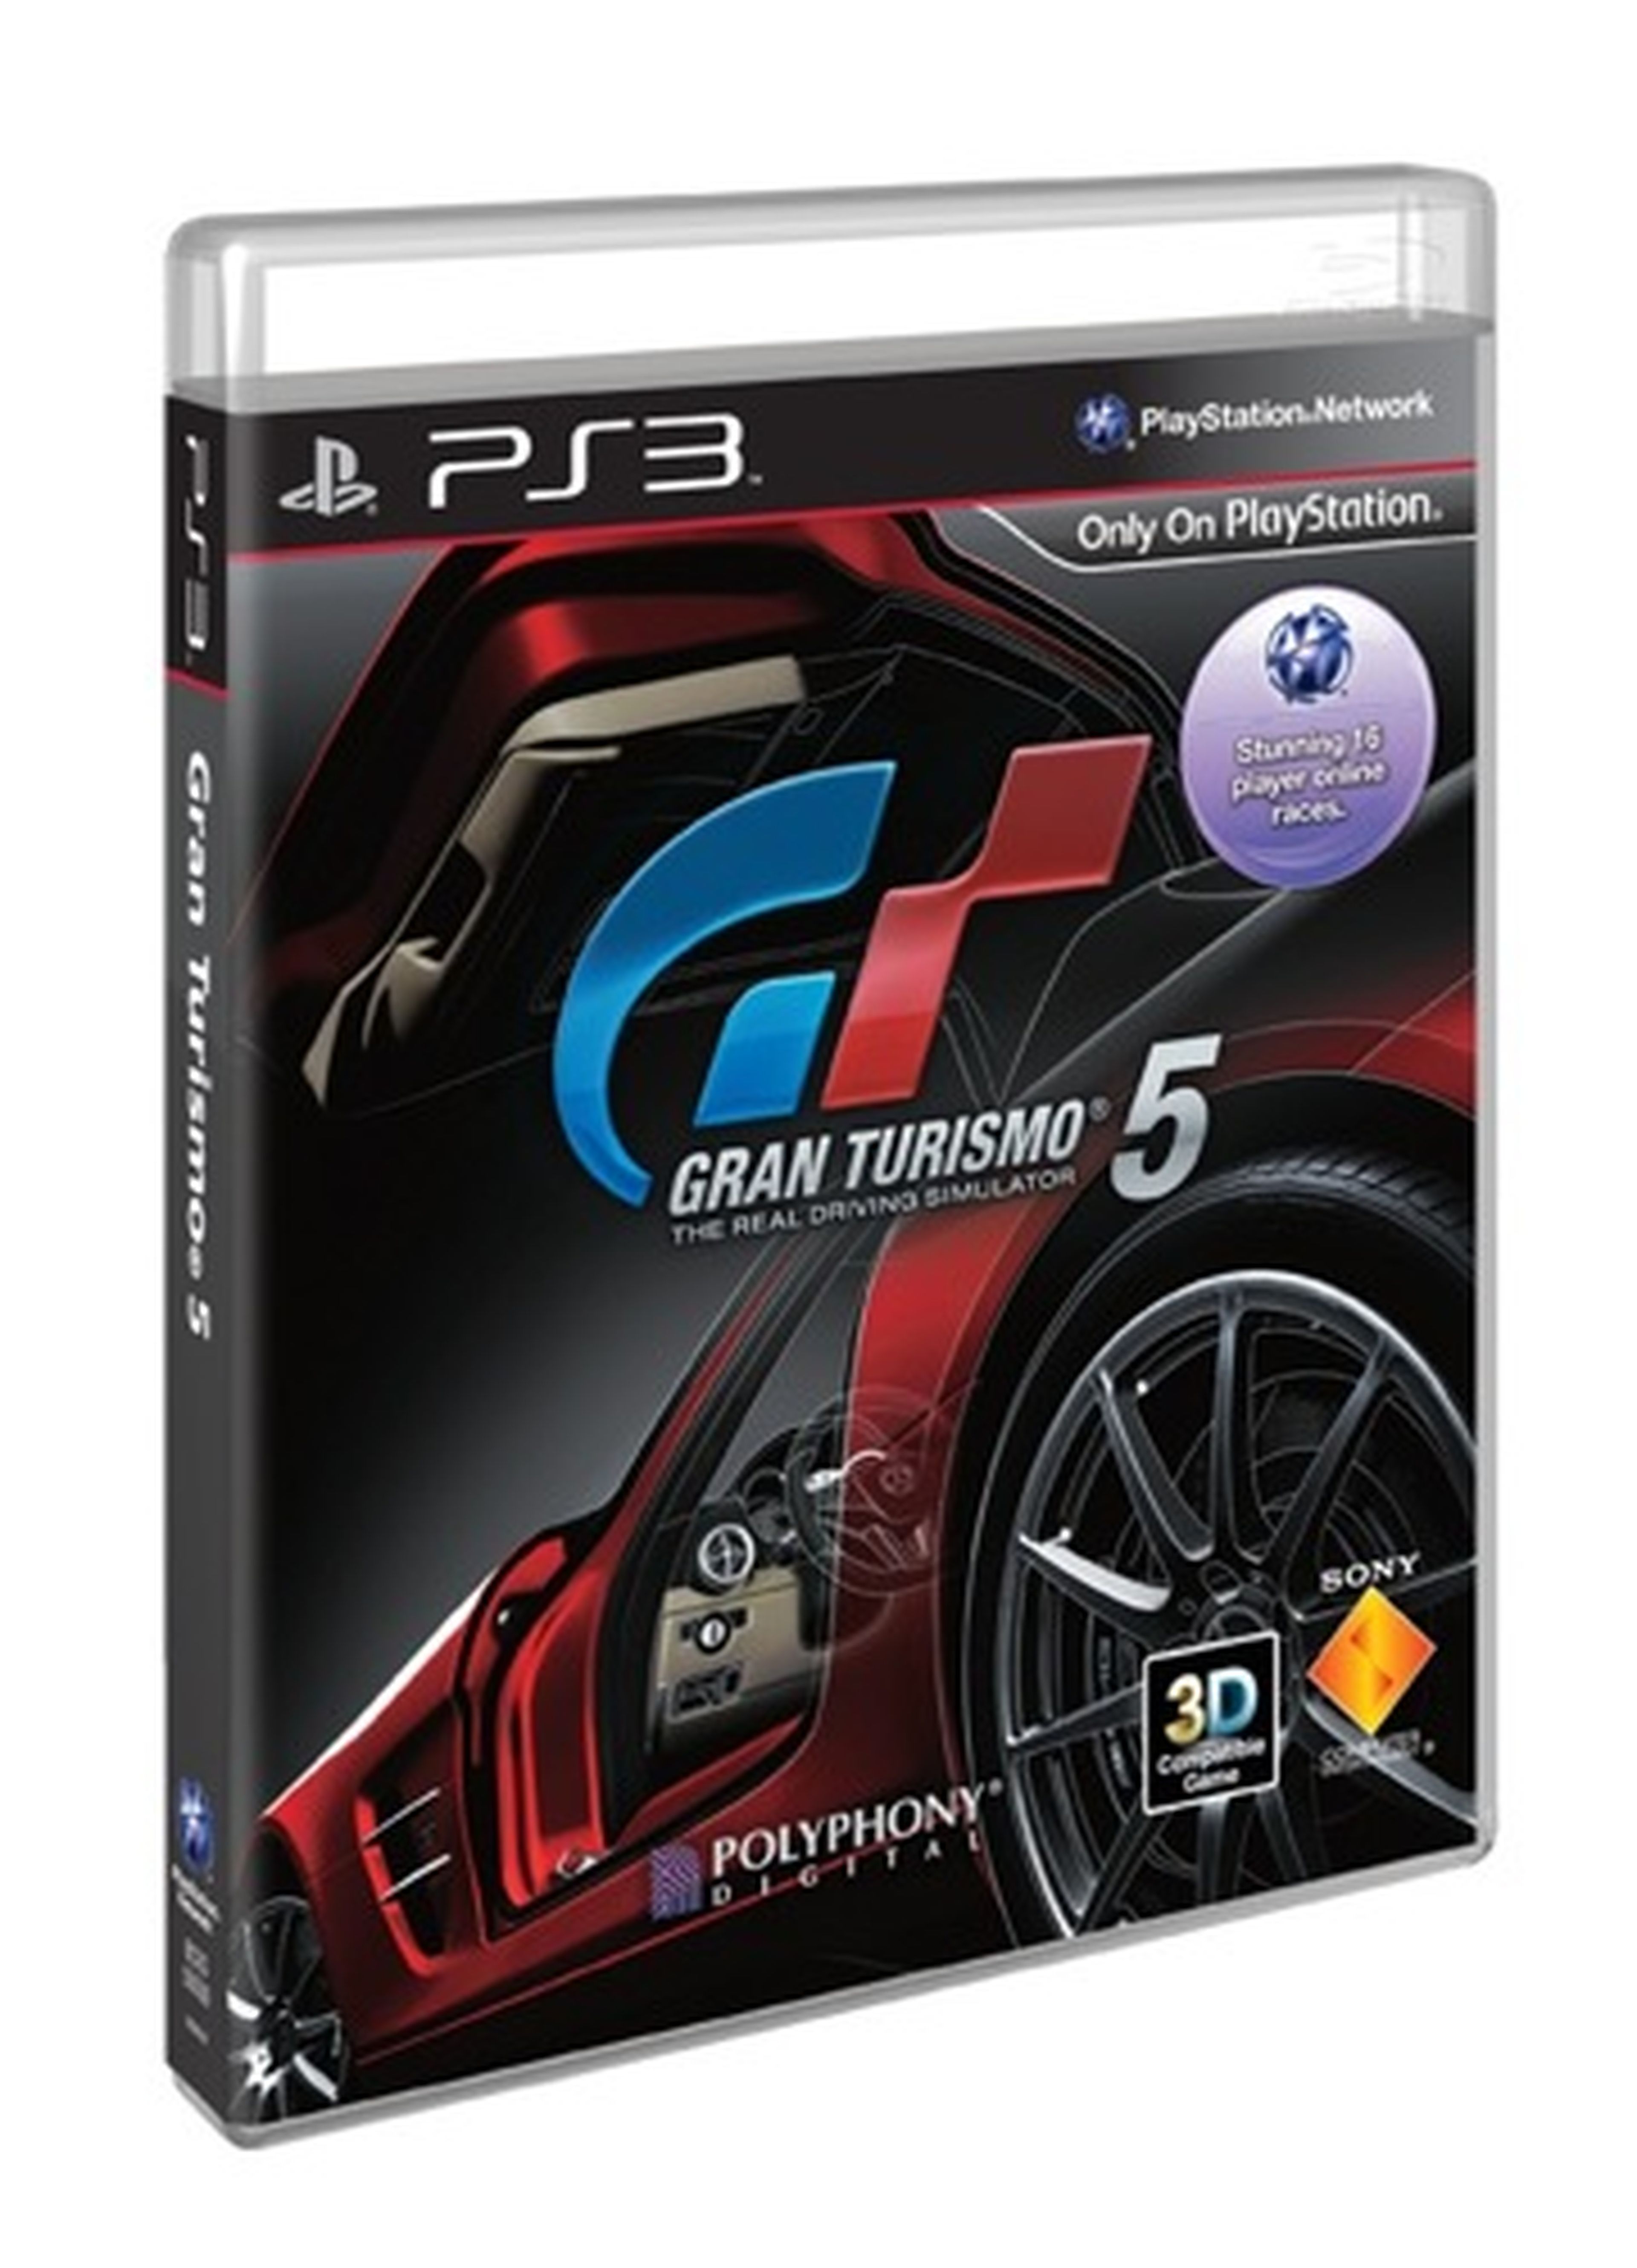 ¡Gran Turismo 5 invade Madrid!